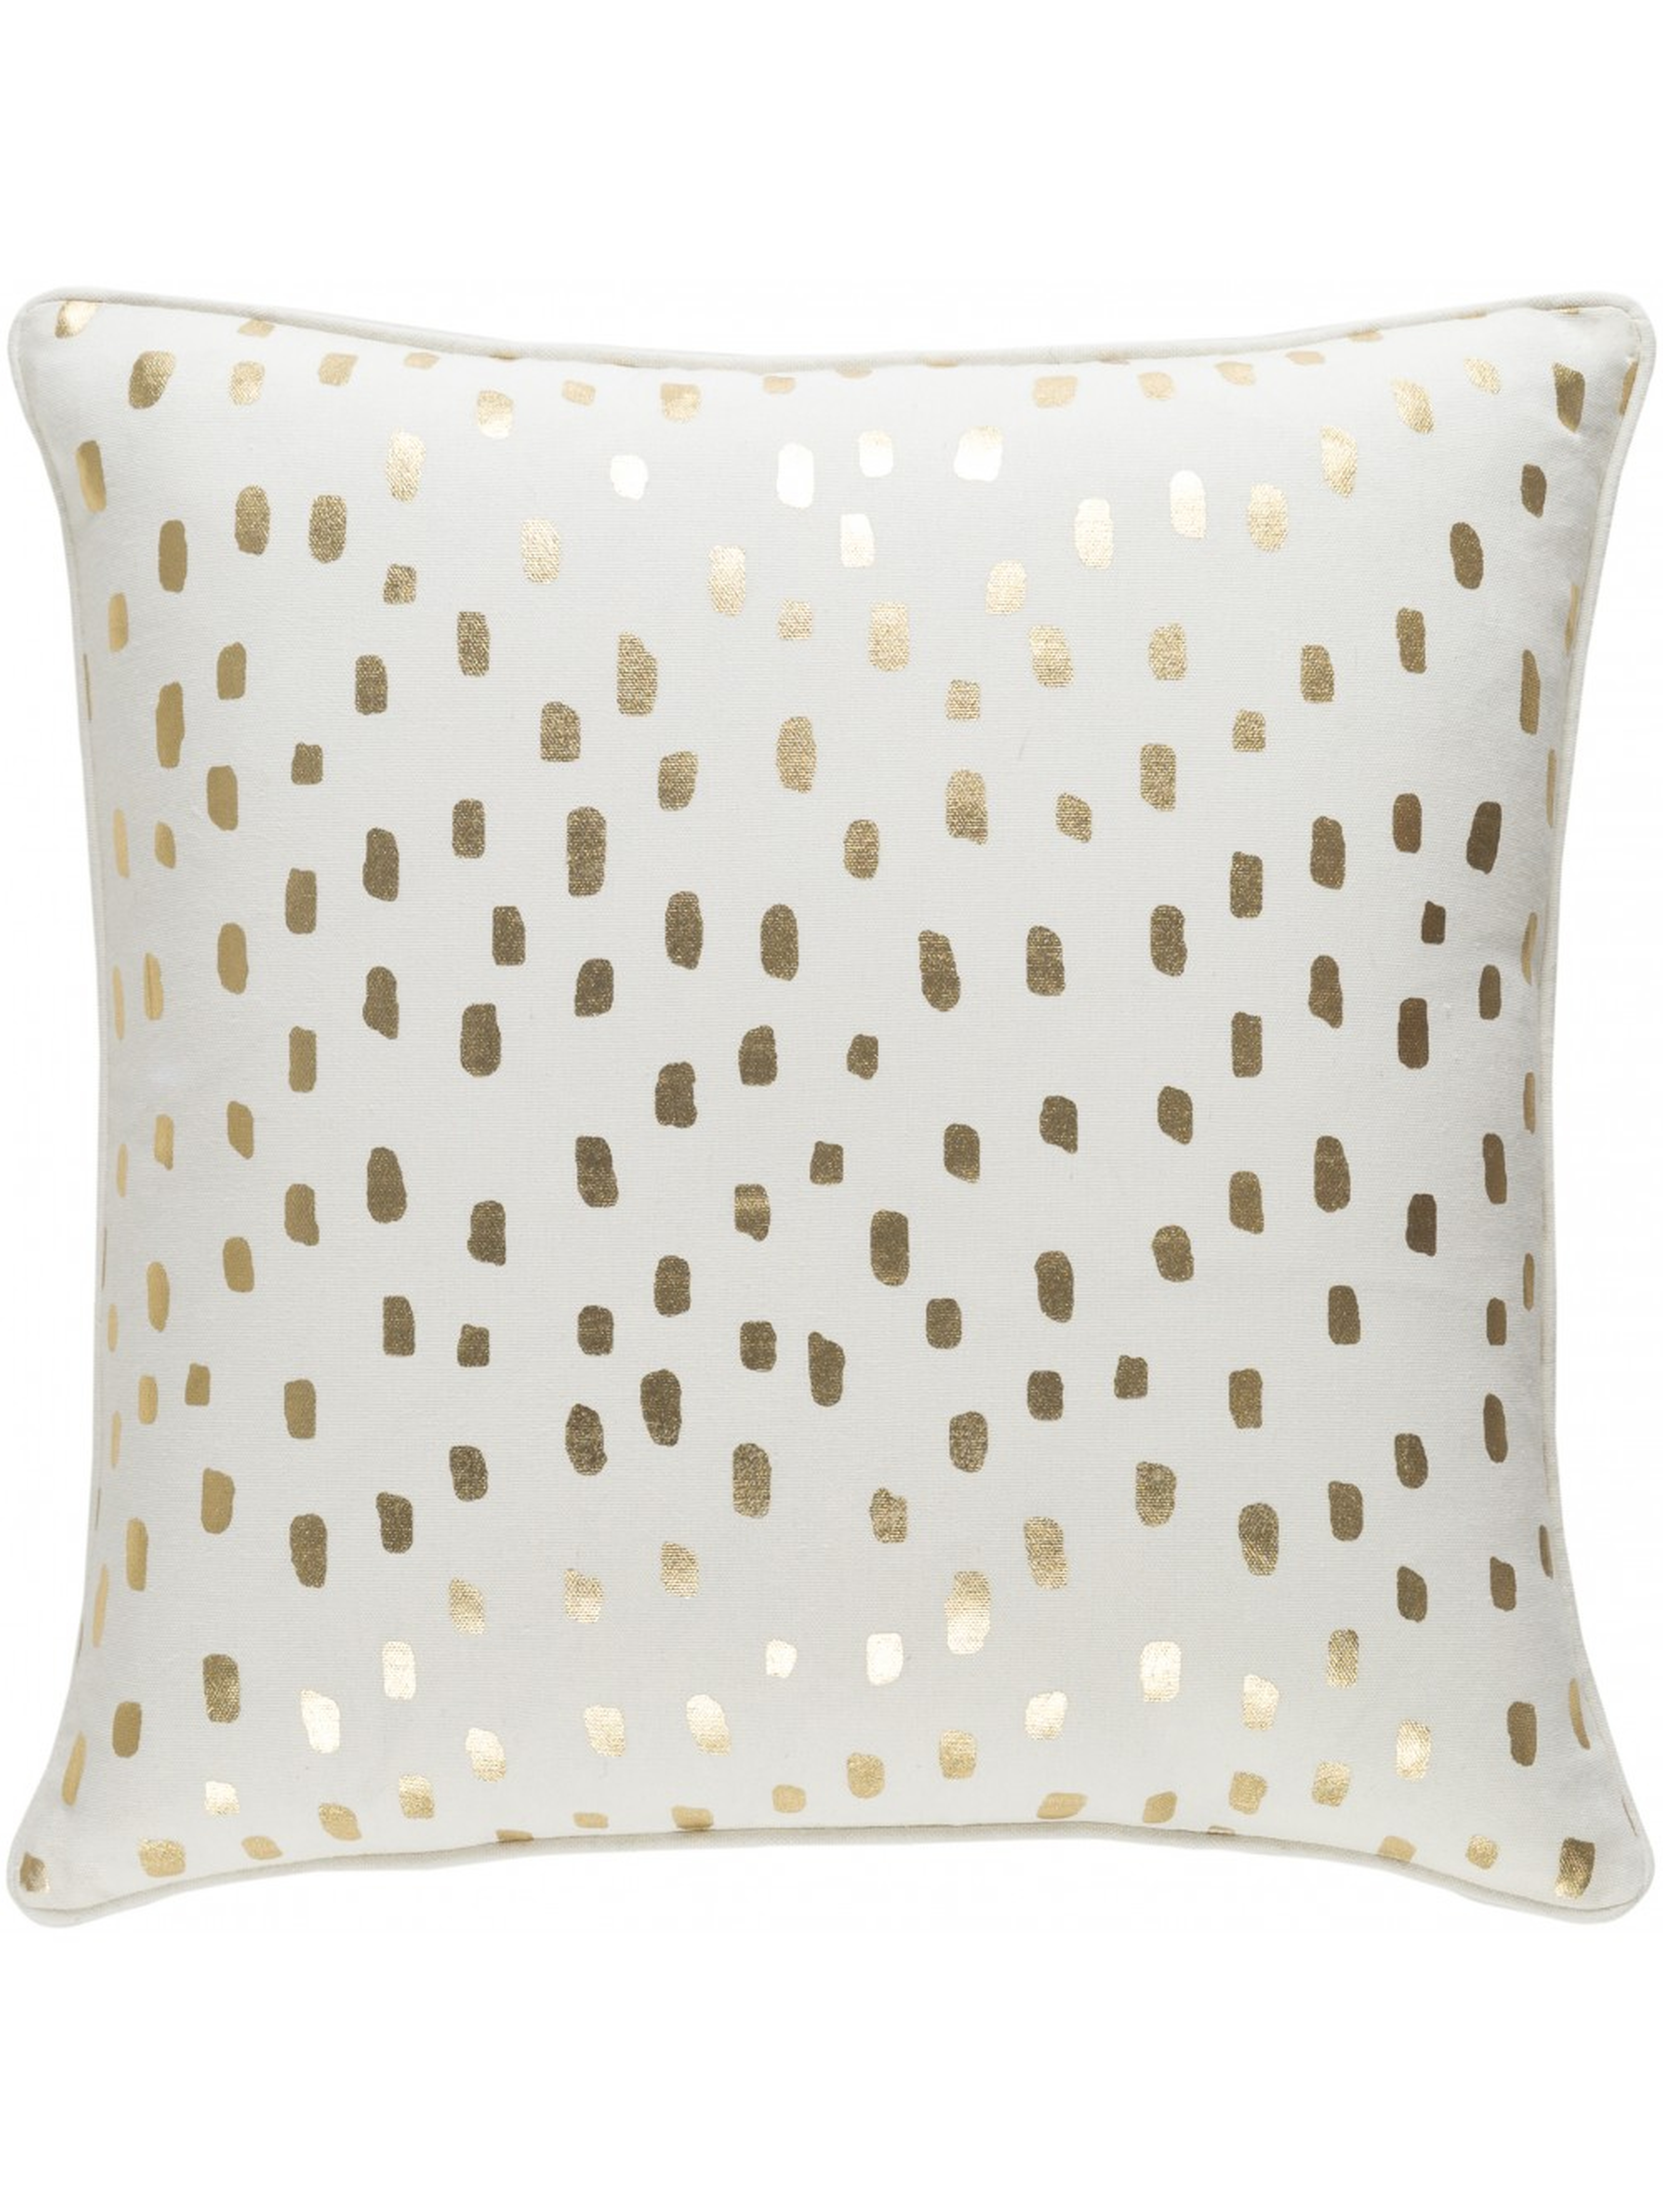 Dalmatian Pillow, Gold - 18" x 18" - polyester Filled - Lulu and Georgia